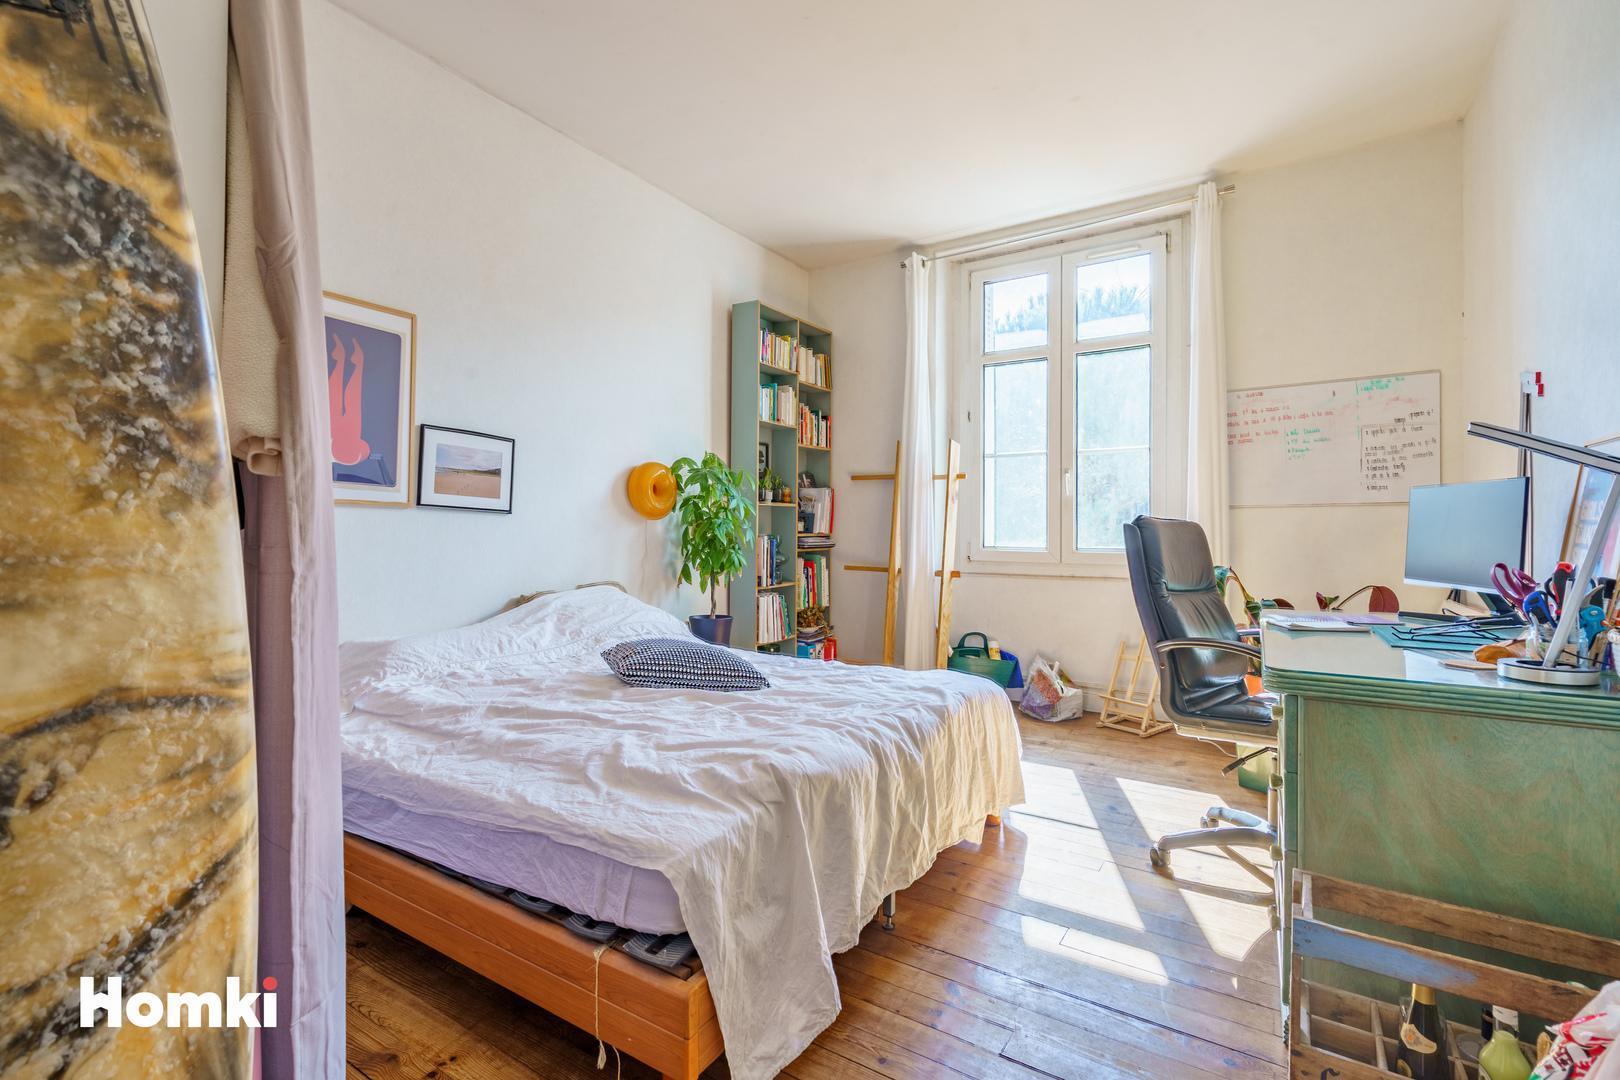 Homki - Vente Appartement  de 90.15 m² à Biarritz 64200